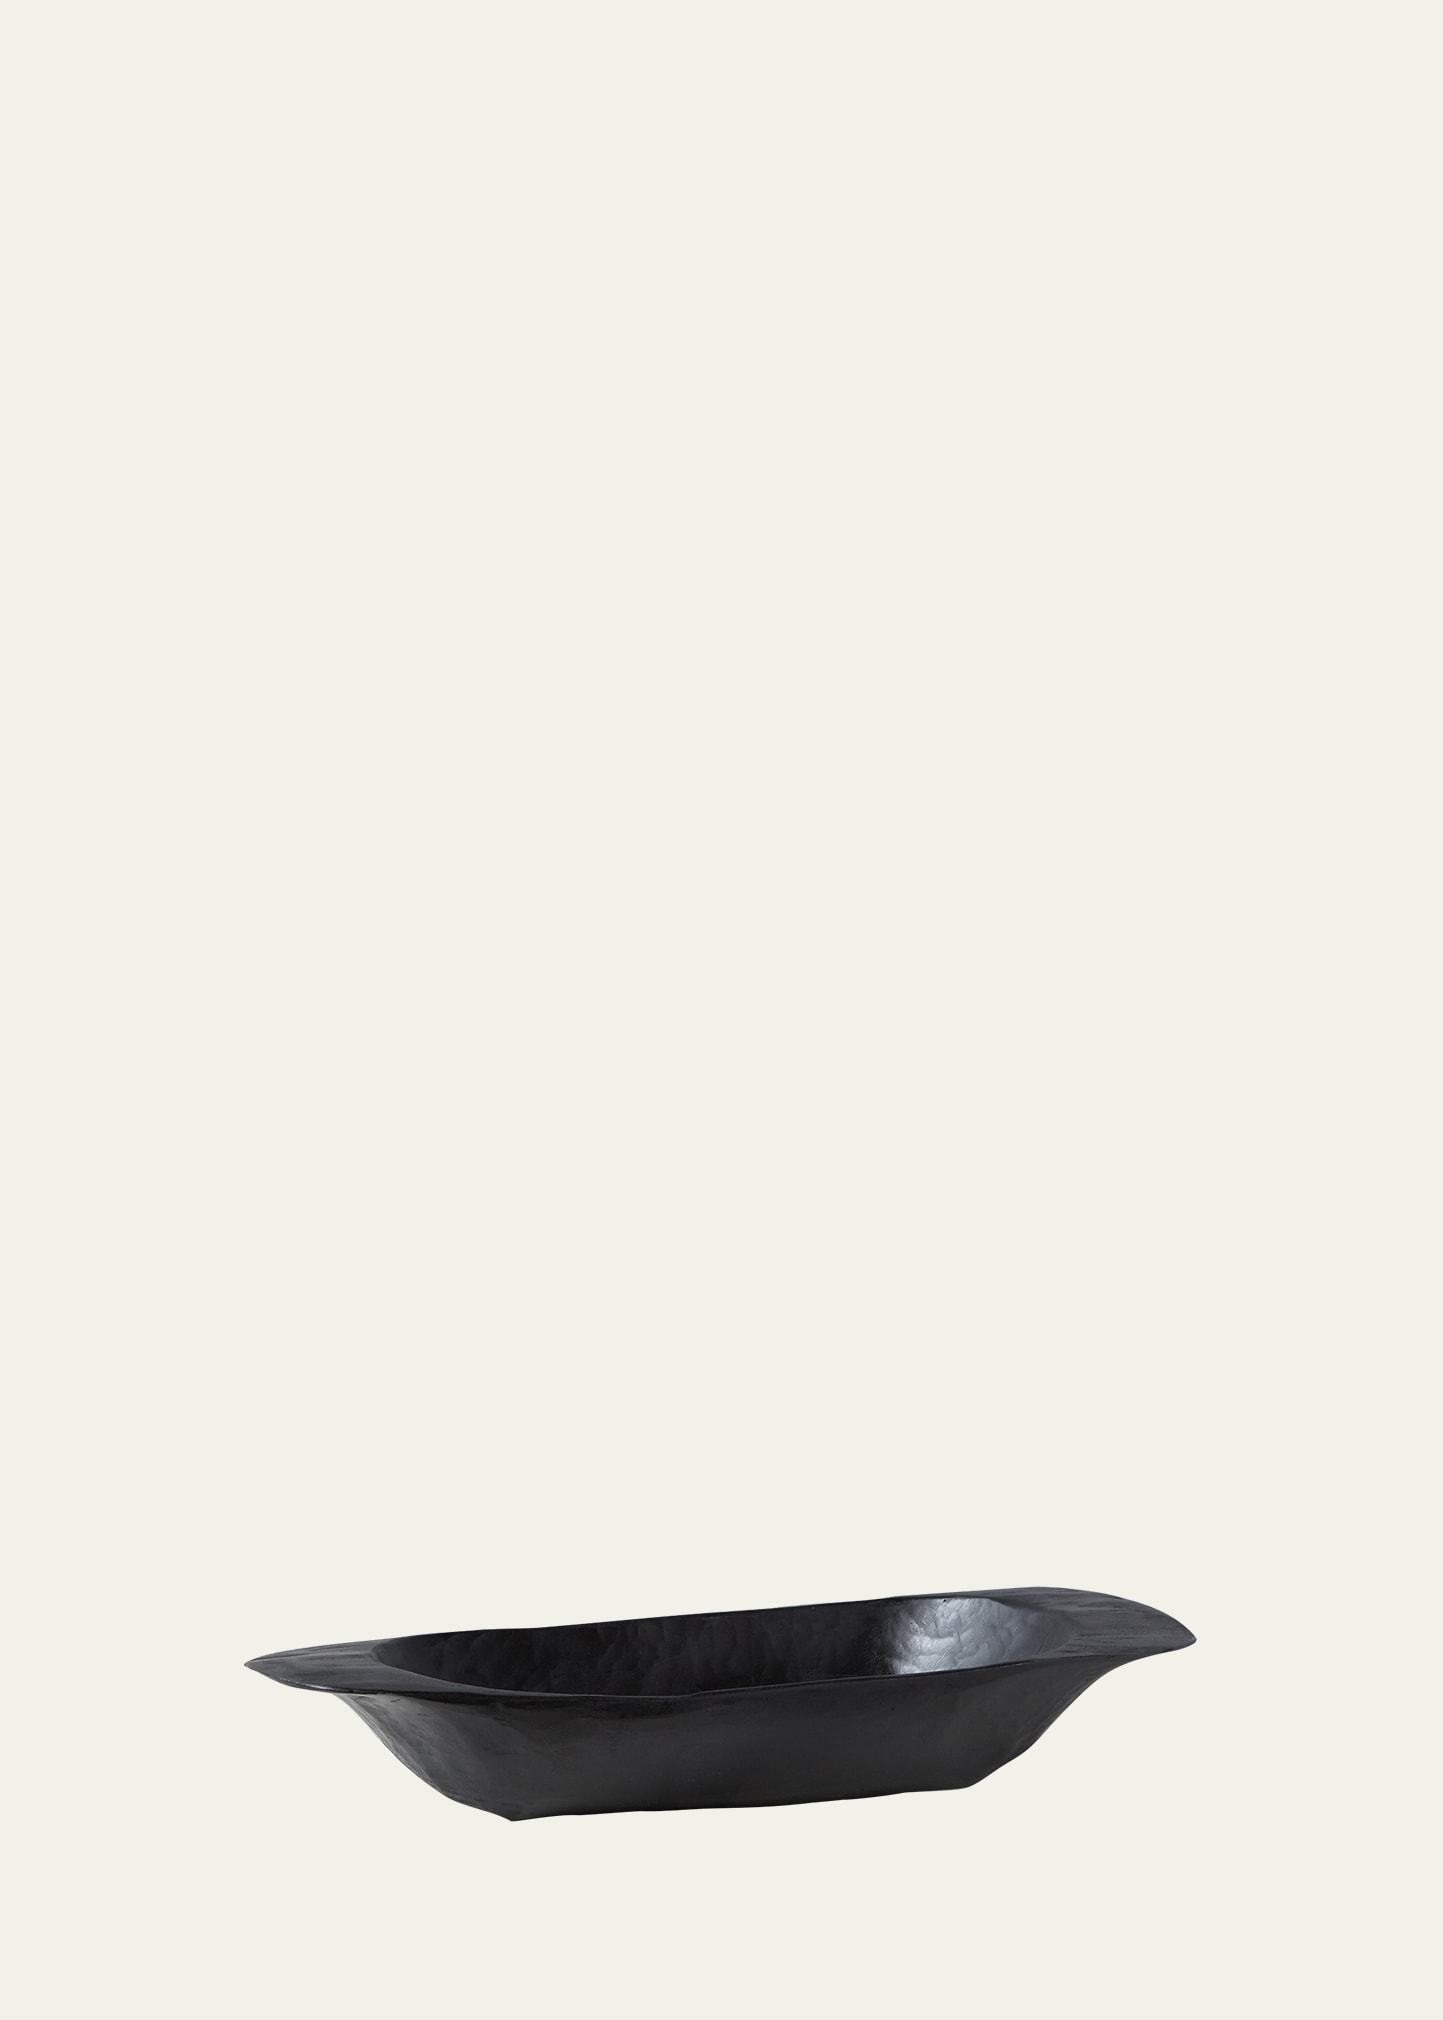 Etúhome Large Black Dough Bowl, 30"